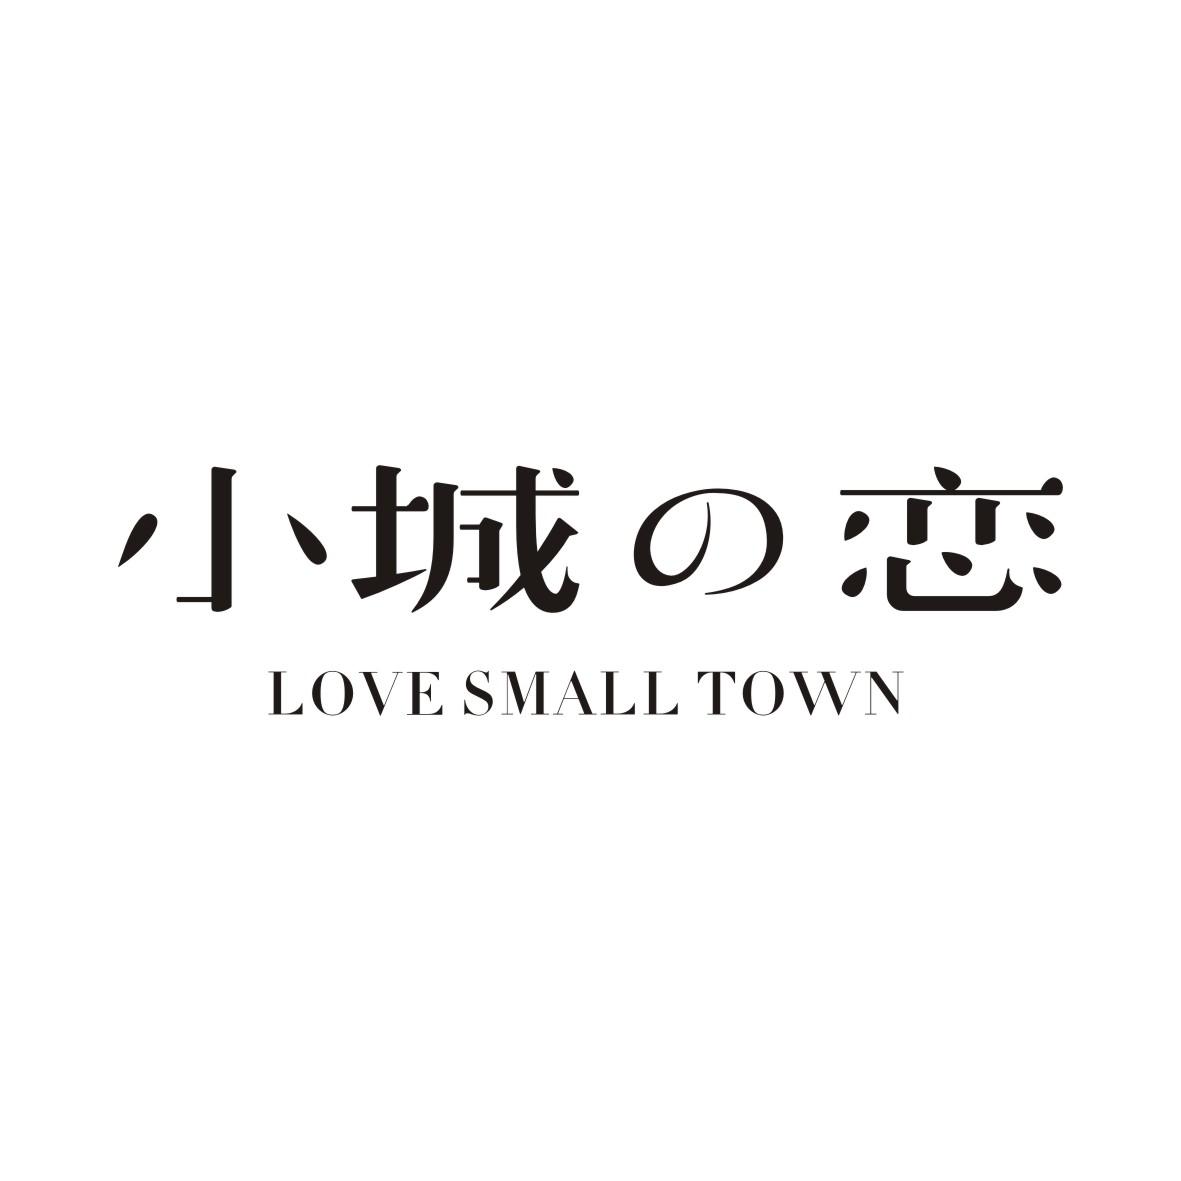 14类-珠宝钟表小城恋 LOVE SMALL TOWN商标转让